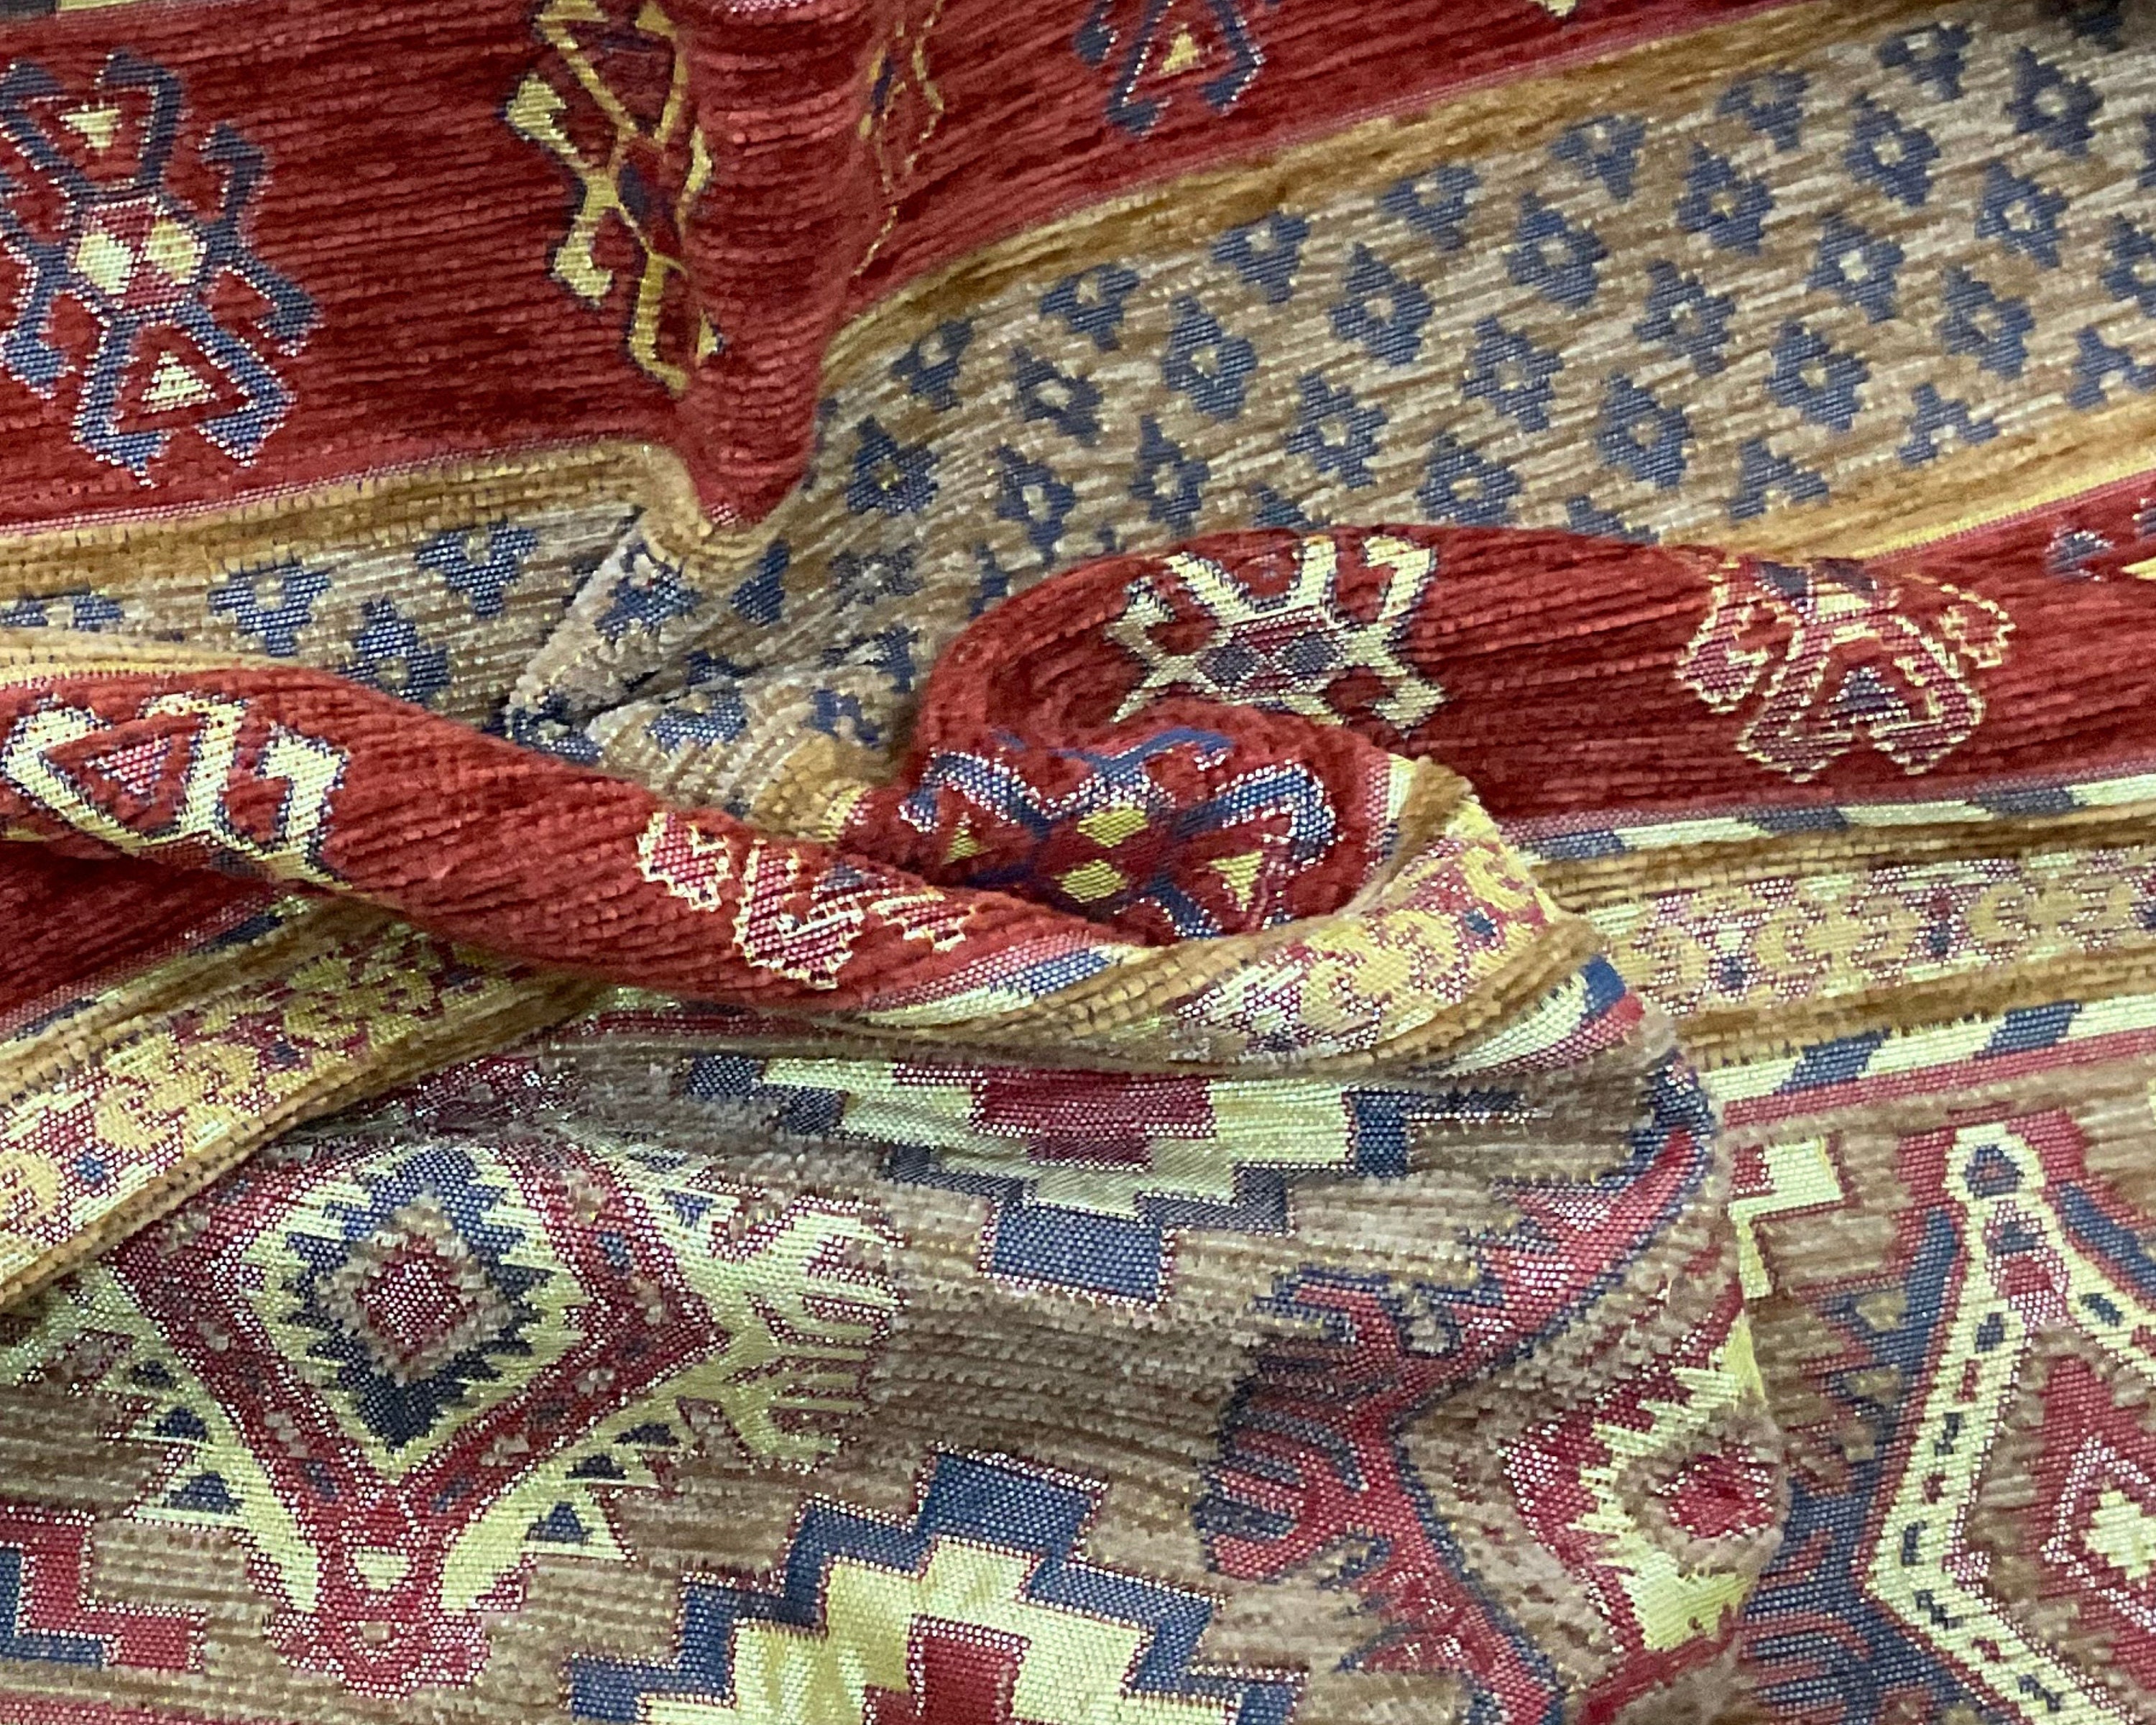 Ethnic Upholstery Fabric, Kilim Fabric, Ottoman Turkish Fabric, Tribal  Tapestry Fabric, Chair, Curtain, Sofa, Bag, Home Decor Fabric by Yard 